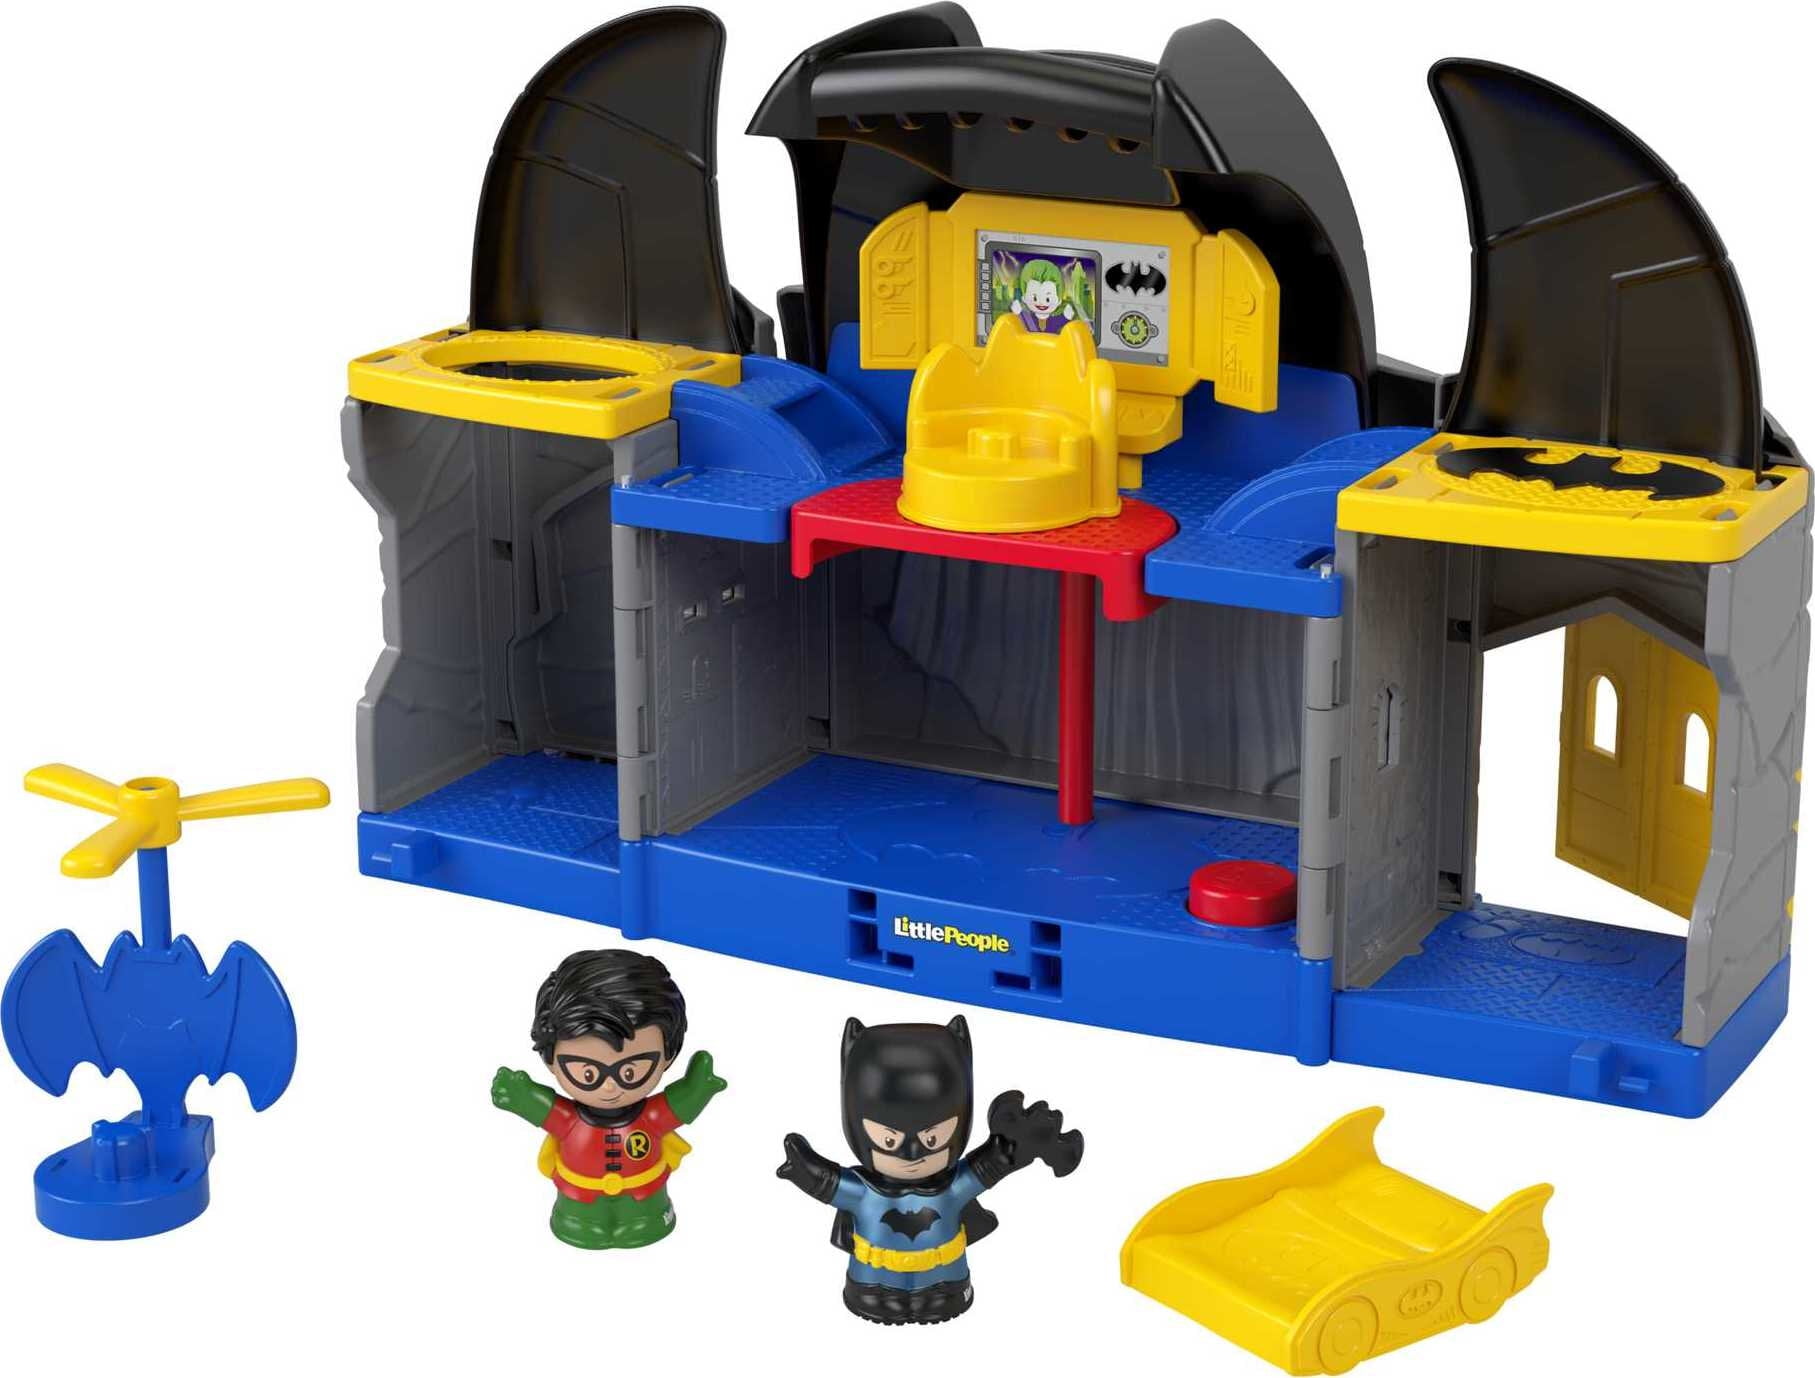 Little People DC Super Friends Batcave Batman Playset $15.61 + Free S&H w/ Walmart+ or $35+